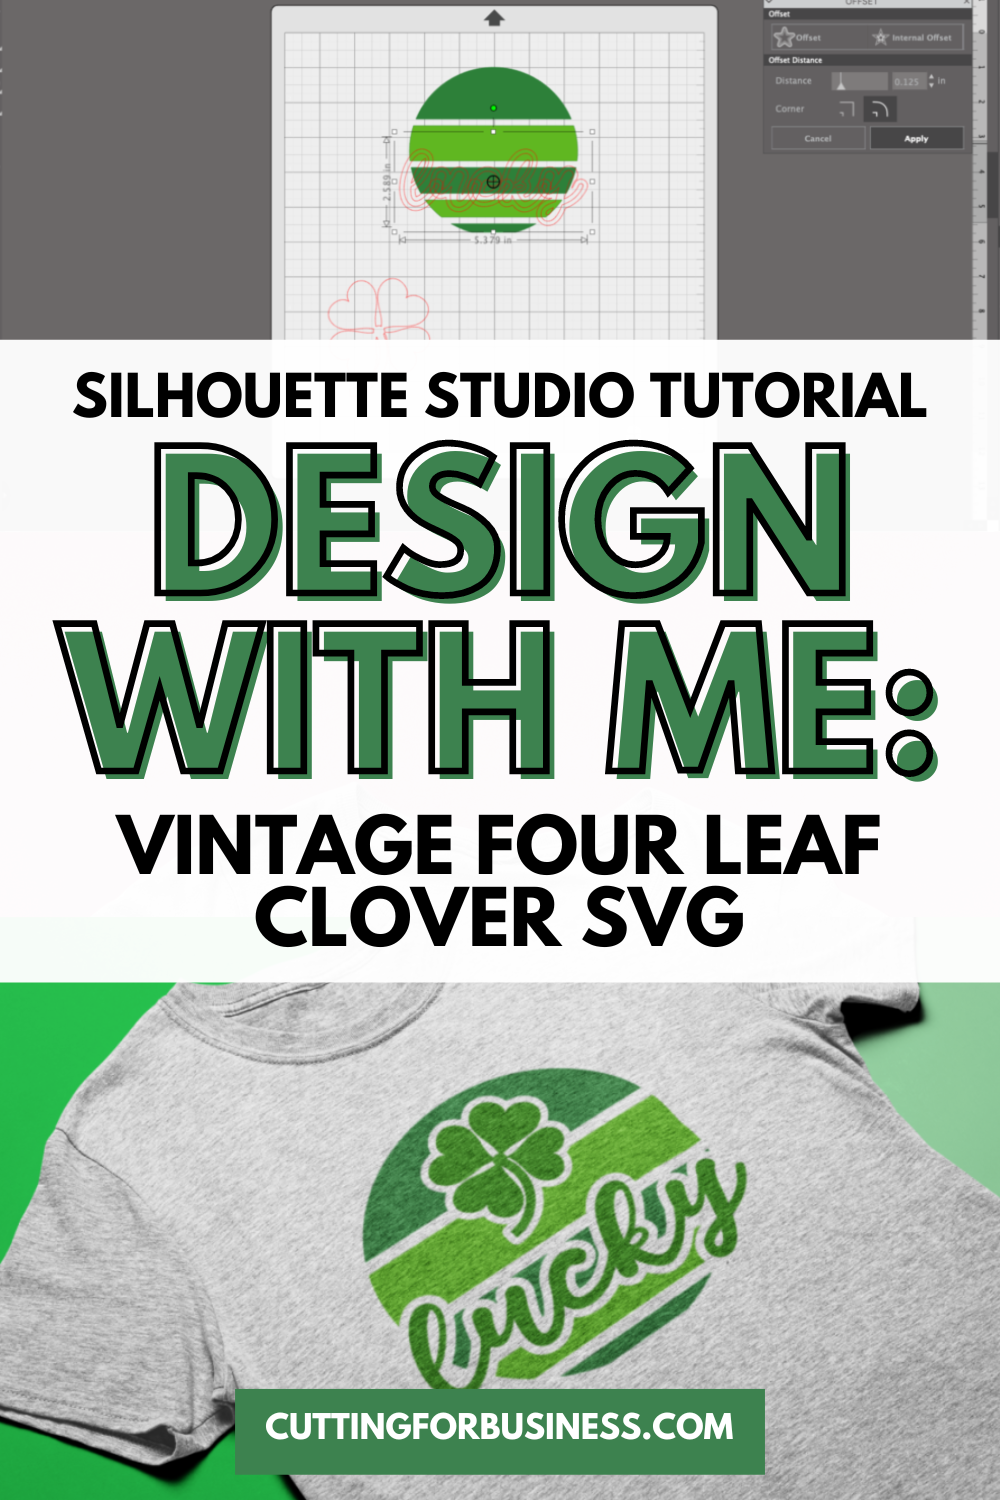 Silhouette Studio Tutorial: Vintage Four Leaf Clover SVG - cuttingforbusiness.com